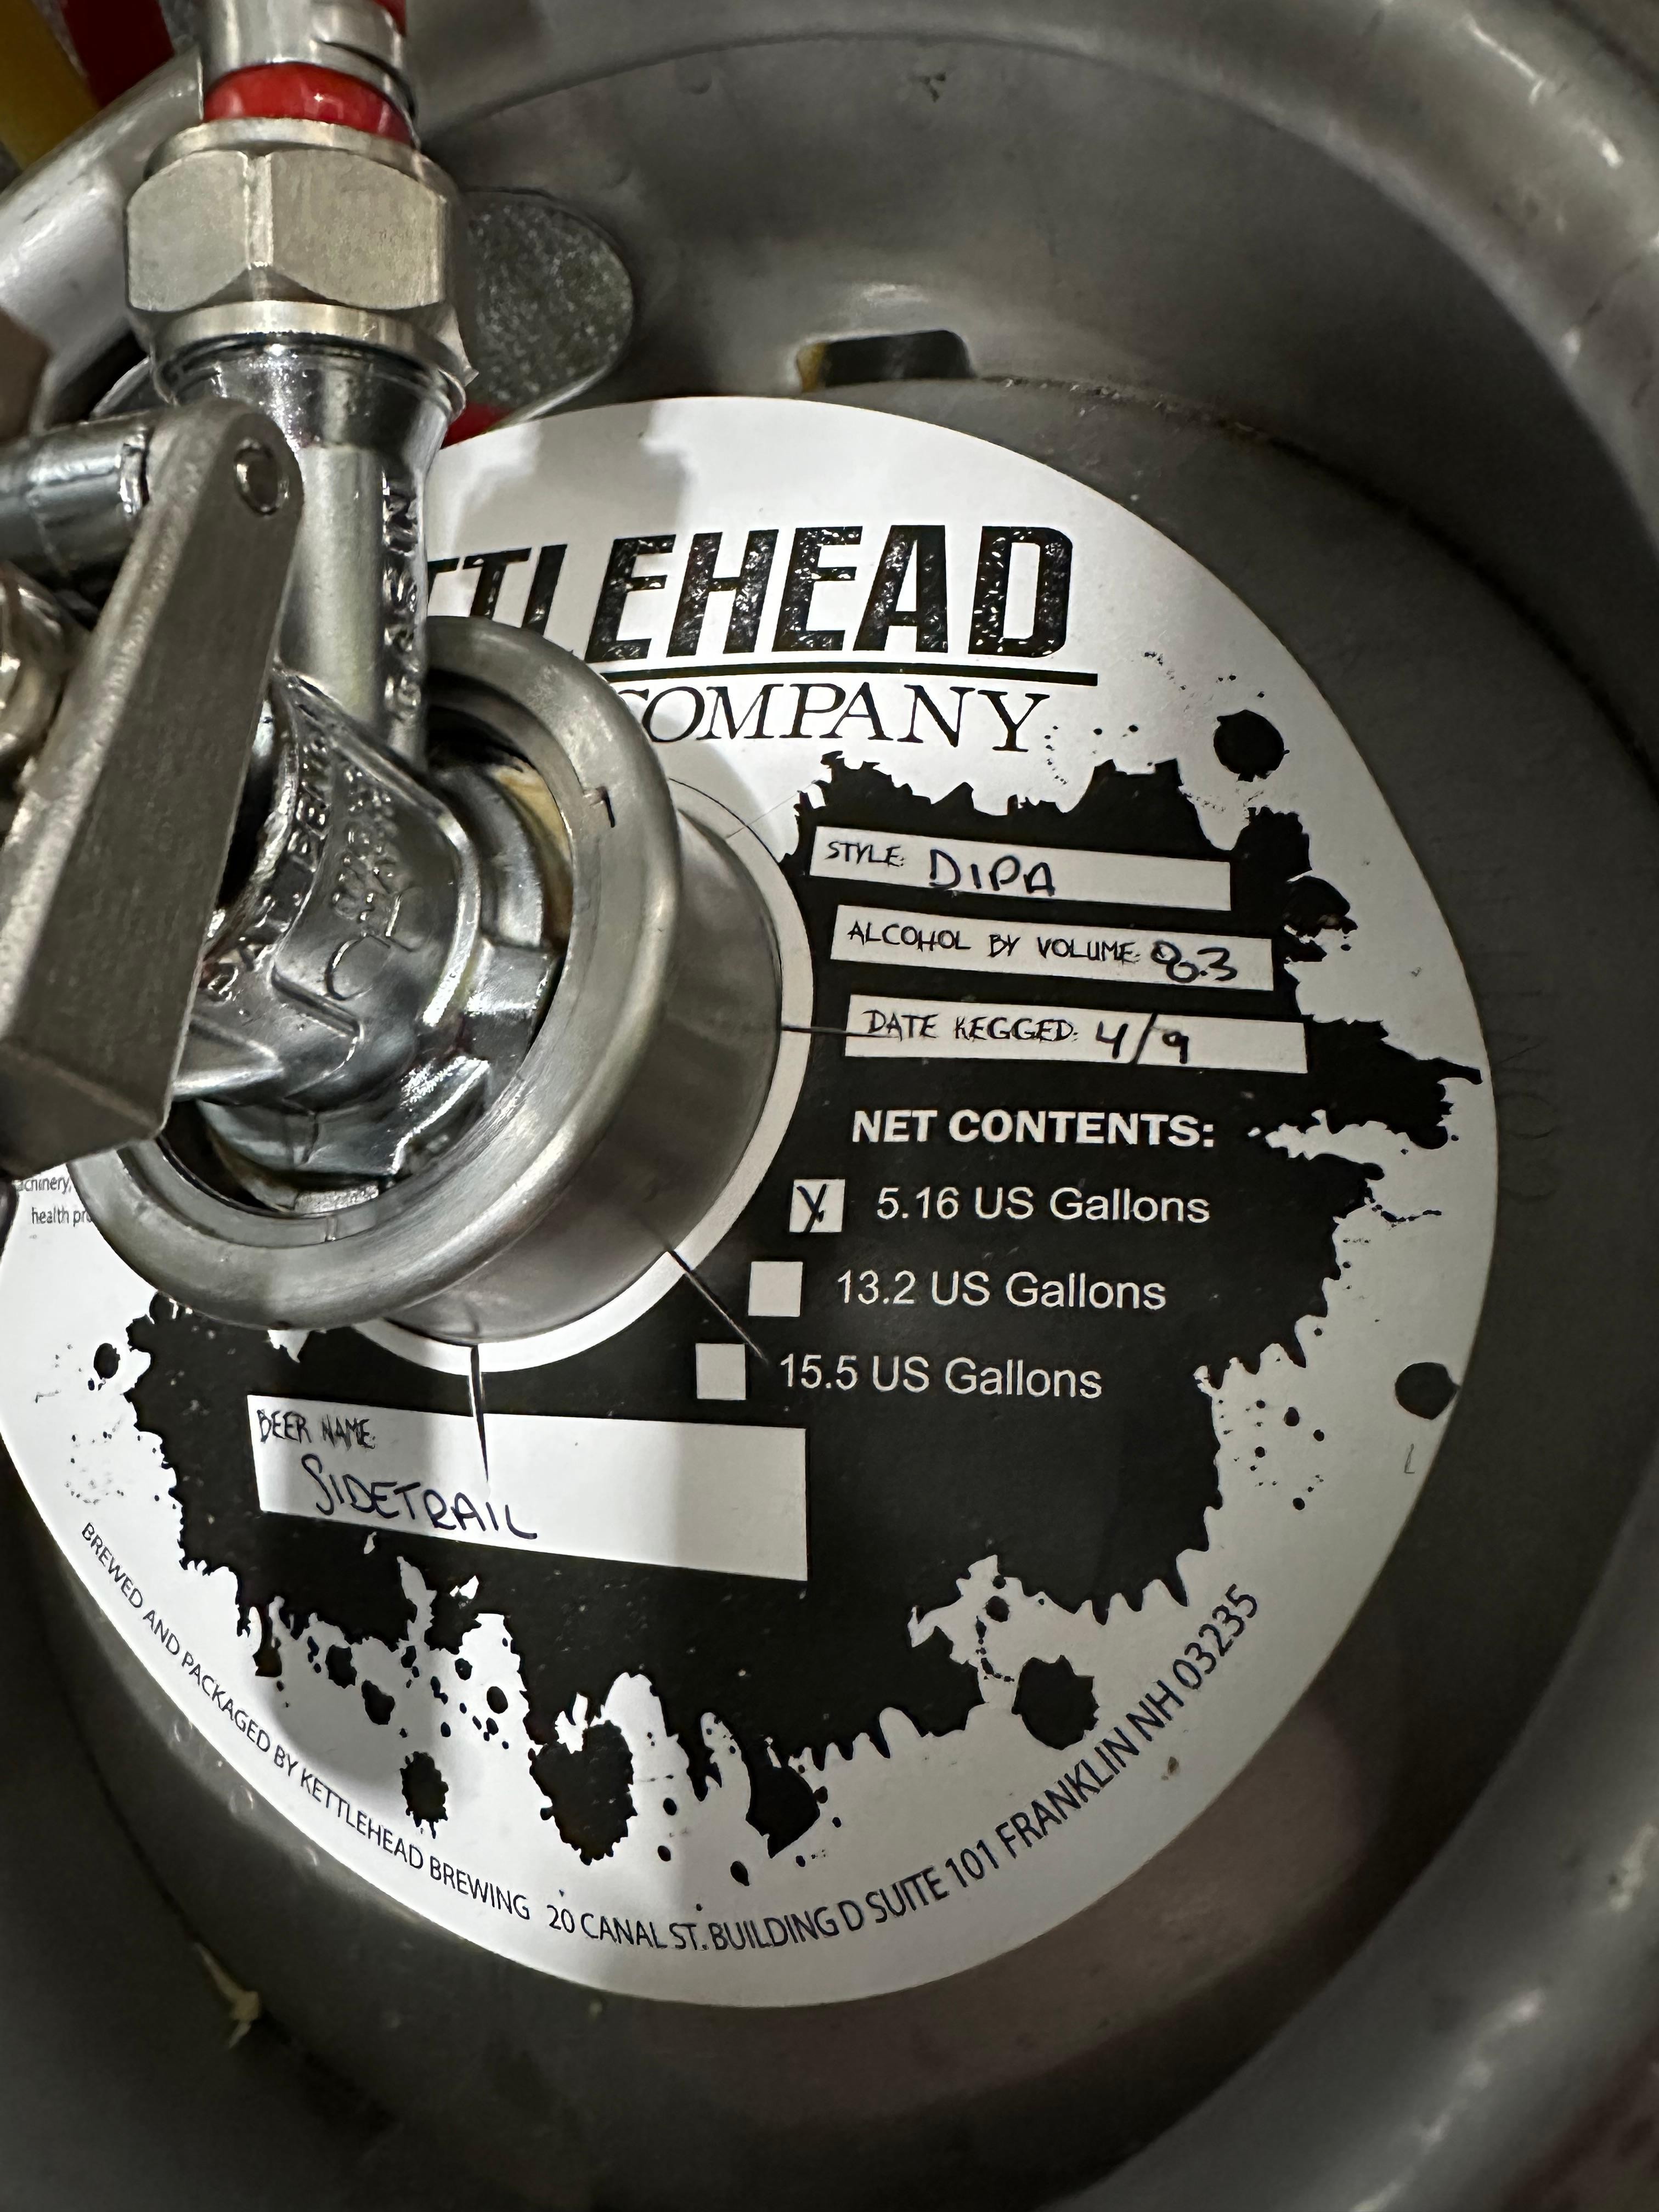 Sidetrail DIPA - Kettlehead  Brewing Company